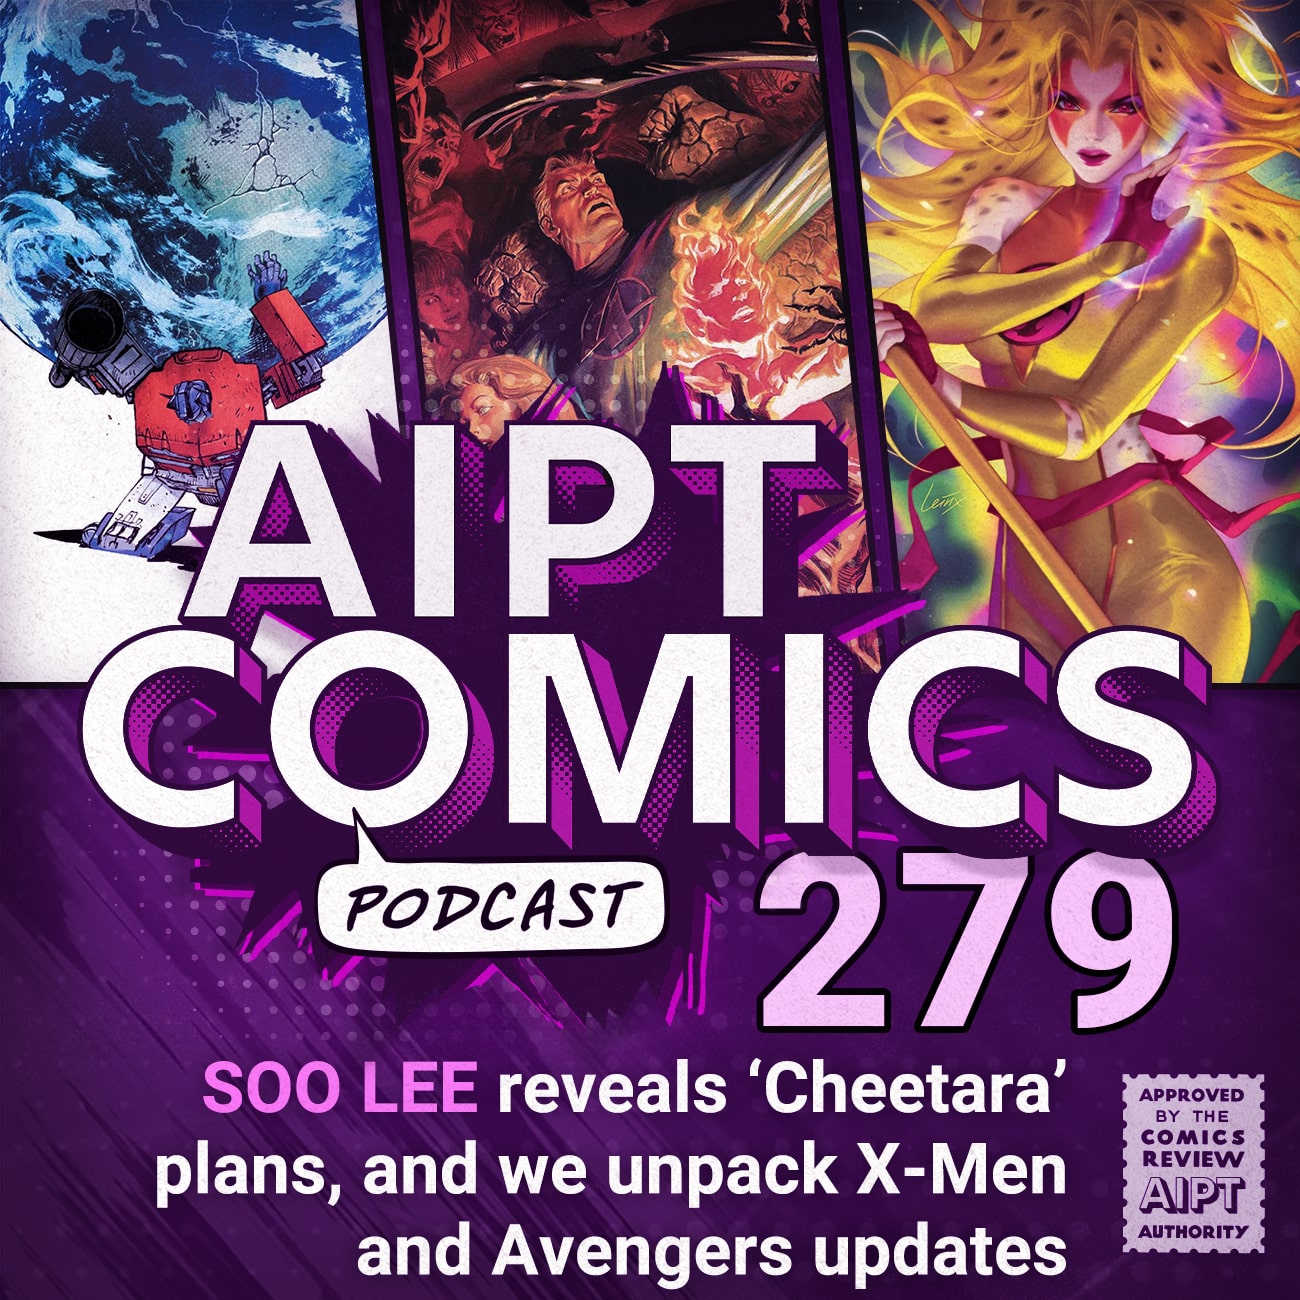 AIPT Comics Podcast Episode 279: Soo Lee reveals ‘Cheetara’ plans, and we unpack X-Men and Avengers updates